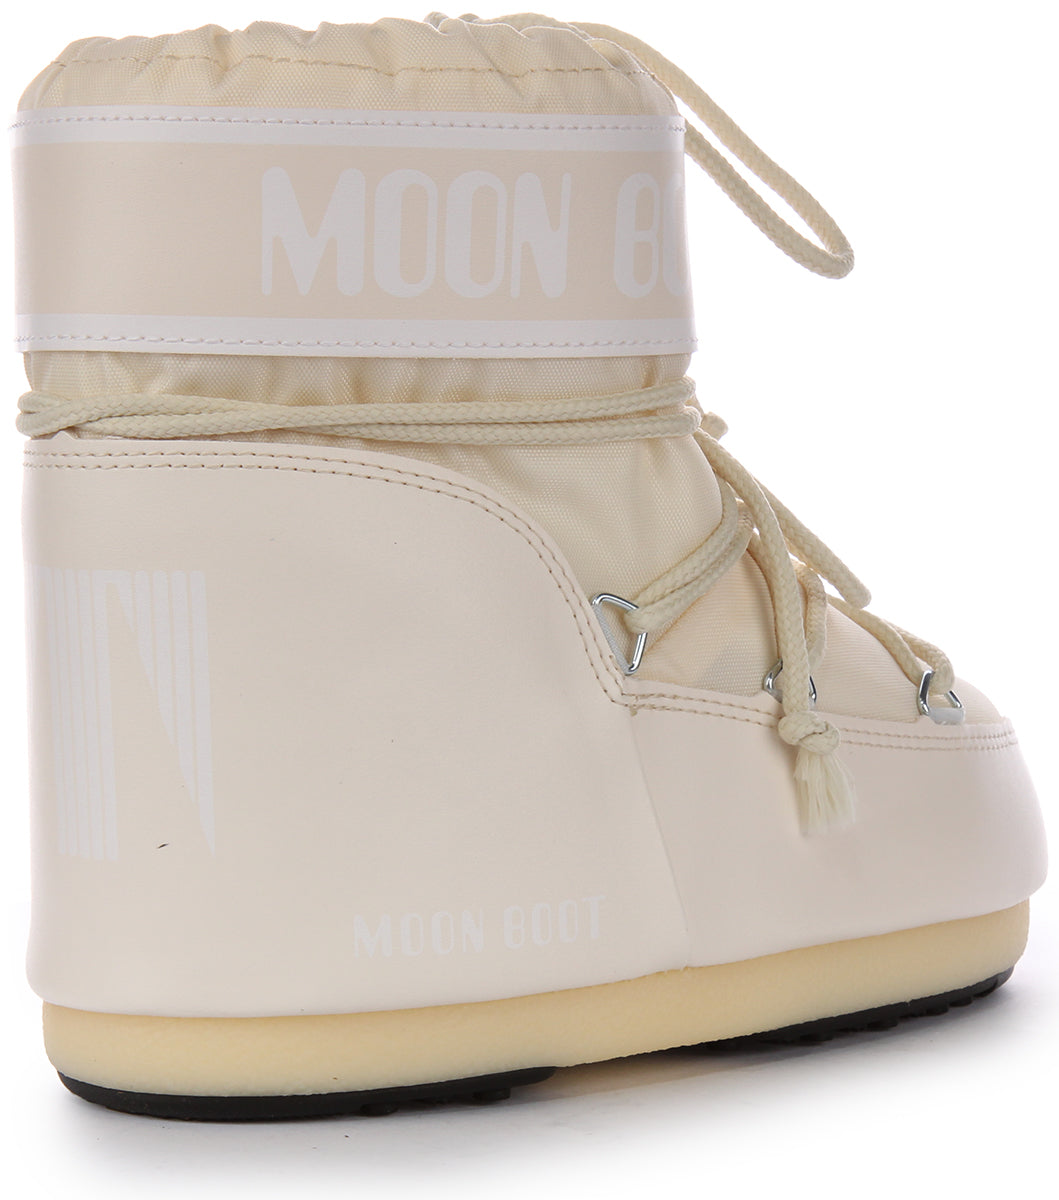 Moon Boot Icon Low Nylon In Cream For Women